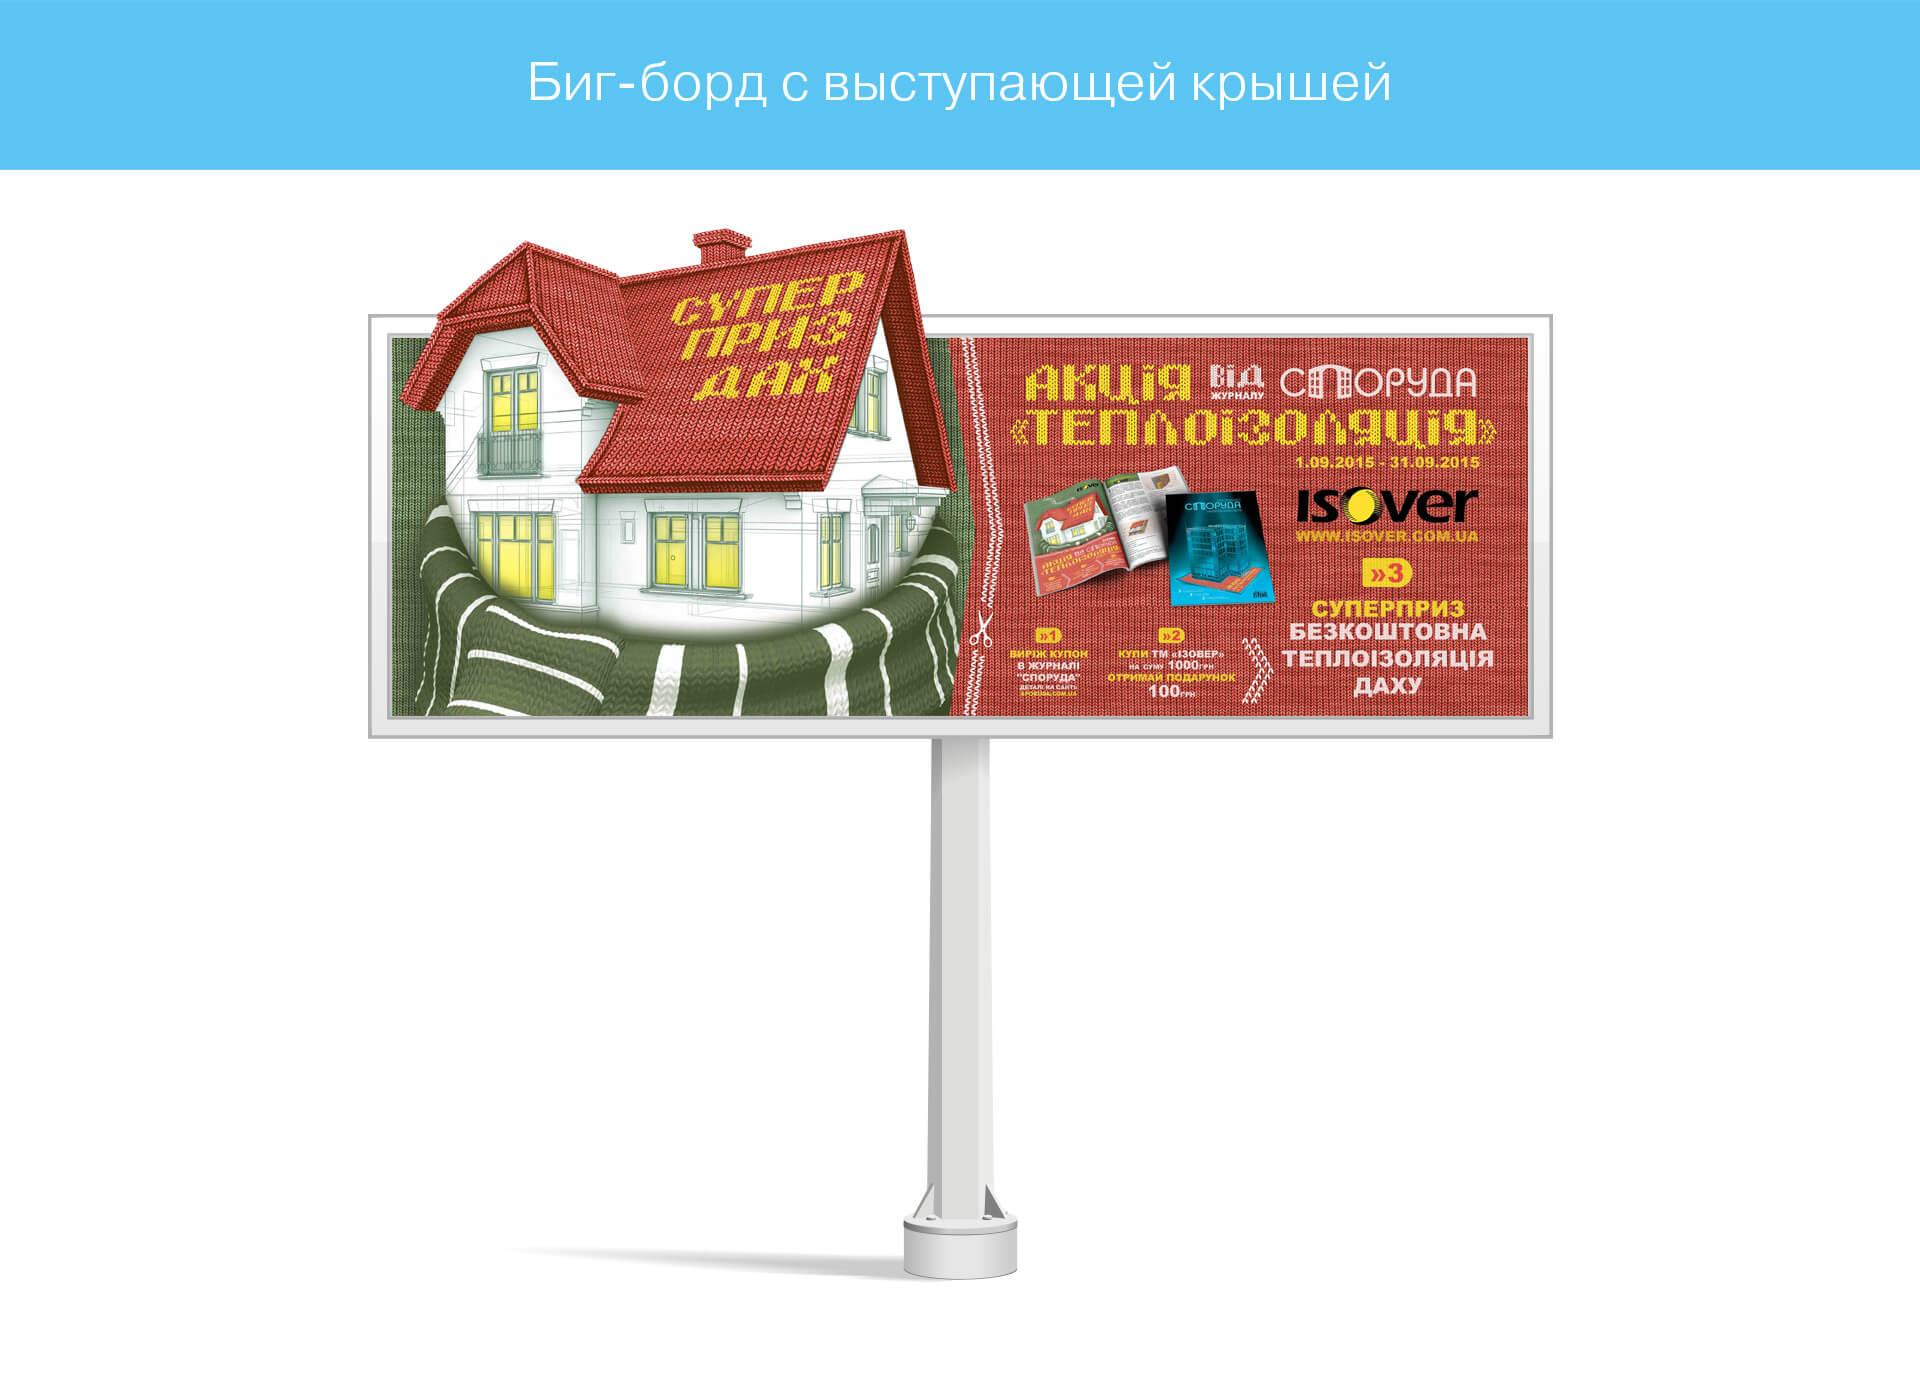 prokochuk_irina_architectural-magazine-sporuda_advertising-campaign_4